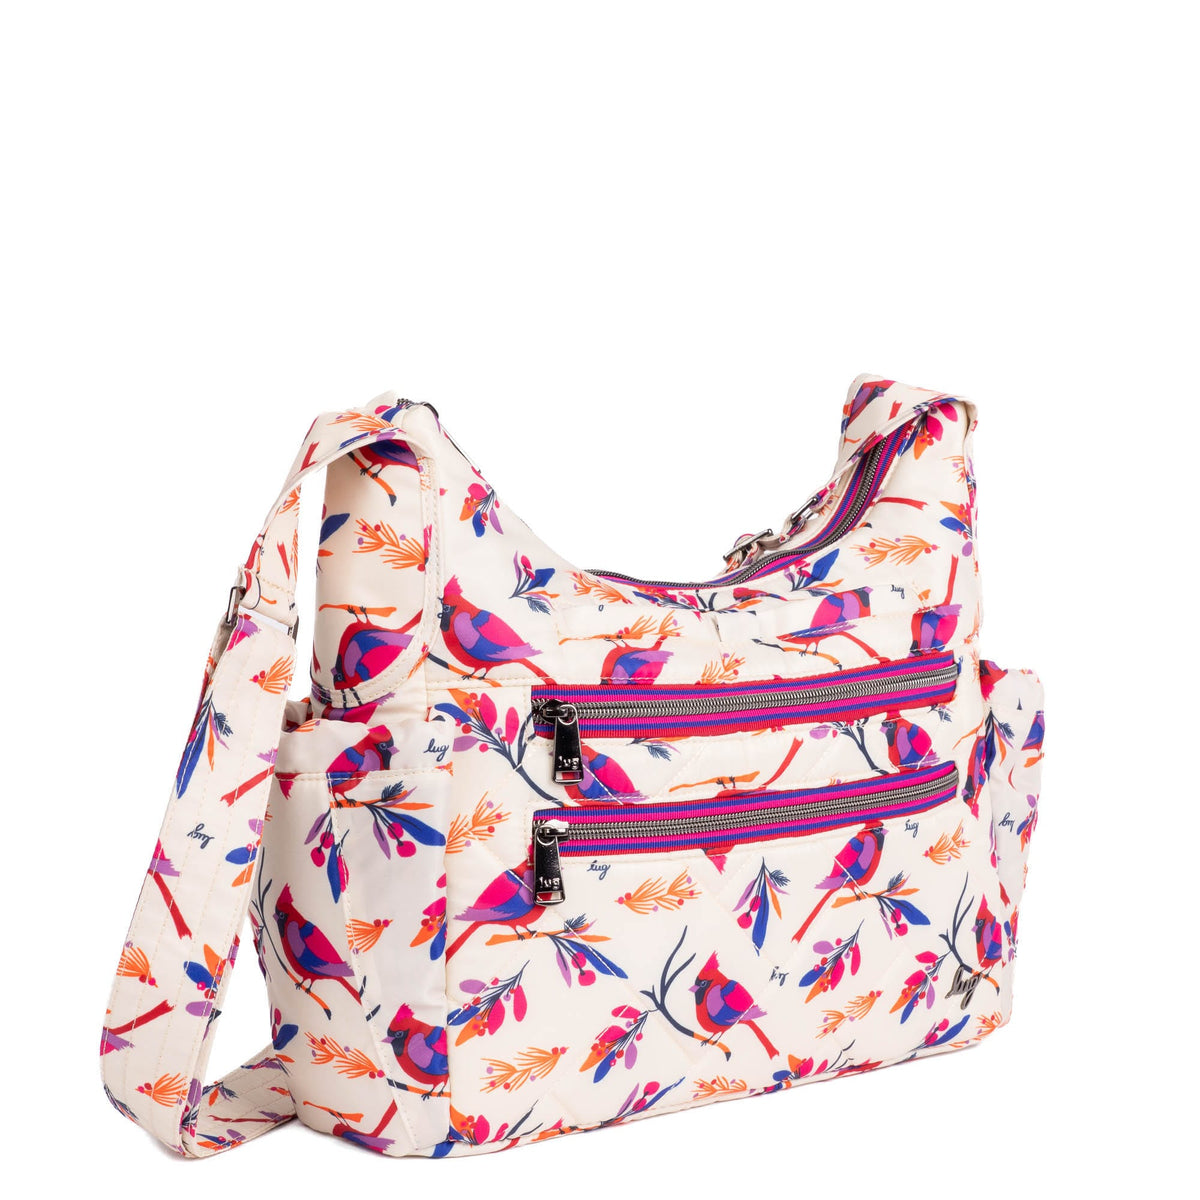 Under One Sky Blush Pink Purse Handbag Crossbody Bag Adjustable Strap